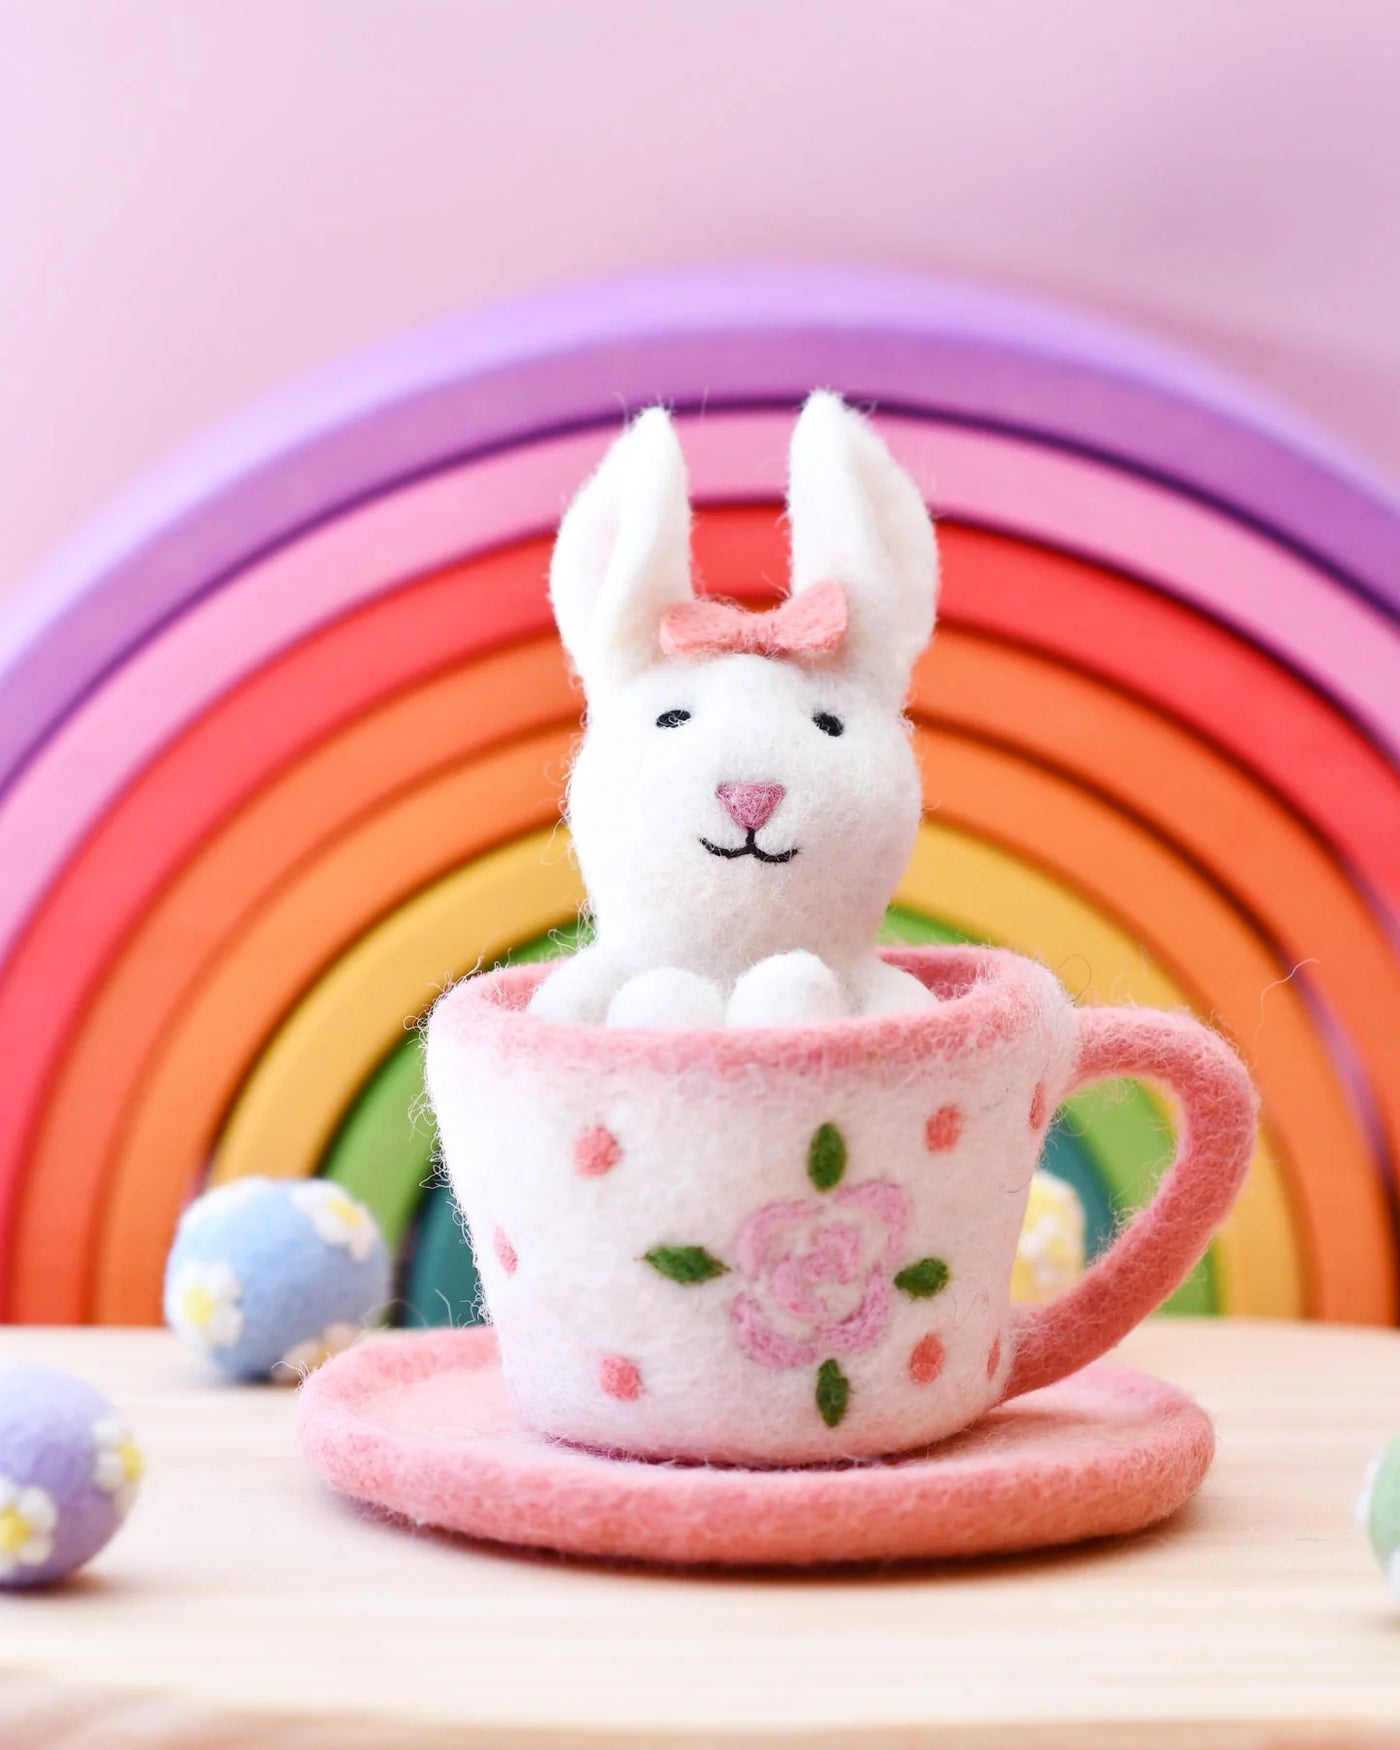 Sale Felt Rabbit in Tea Cup Toy